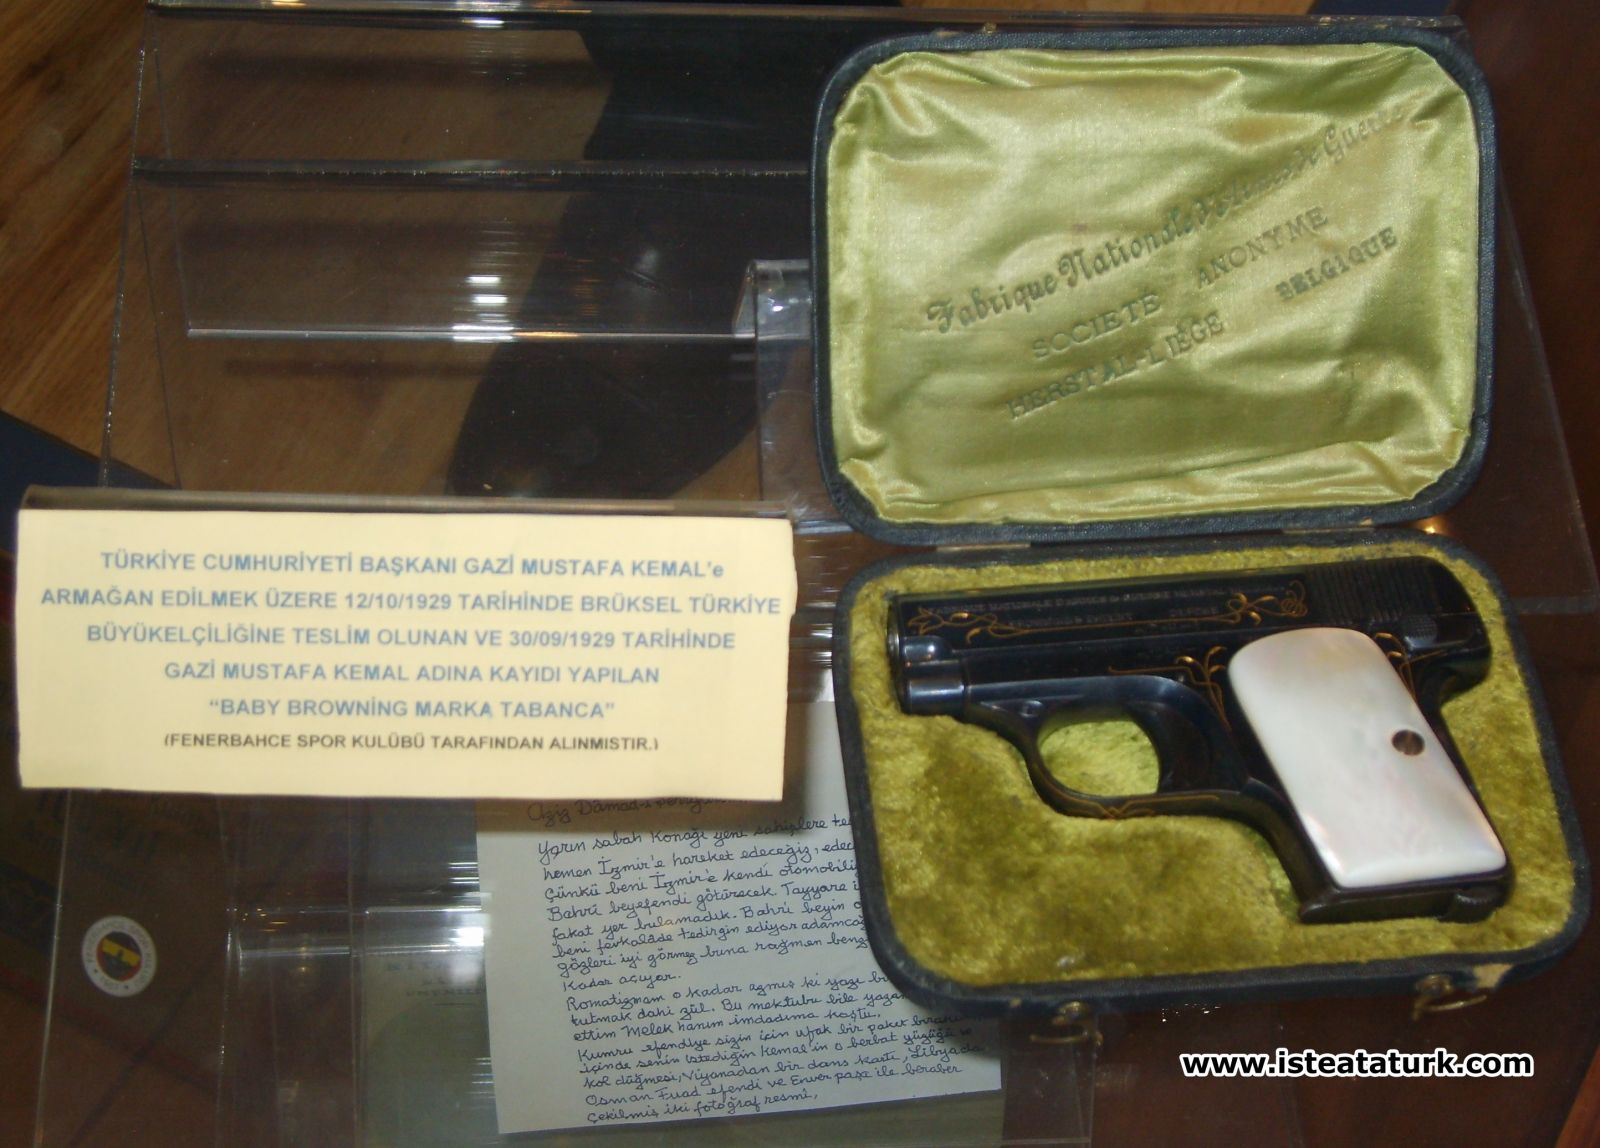 Atatürk's gun in Fenerbahçe Club Museum.